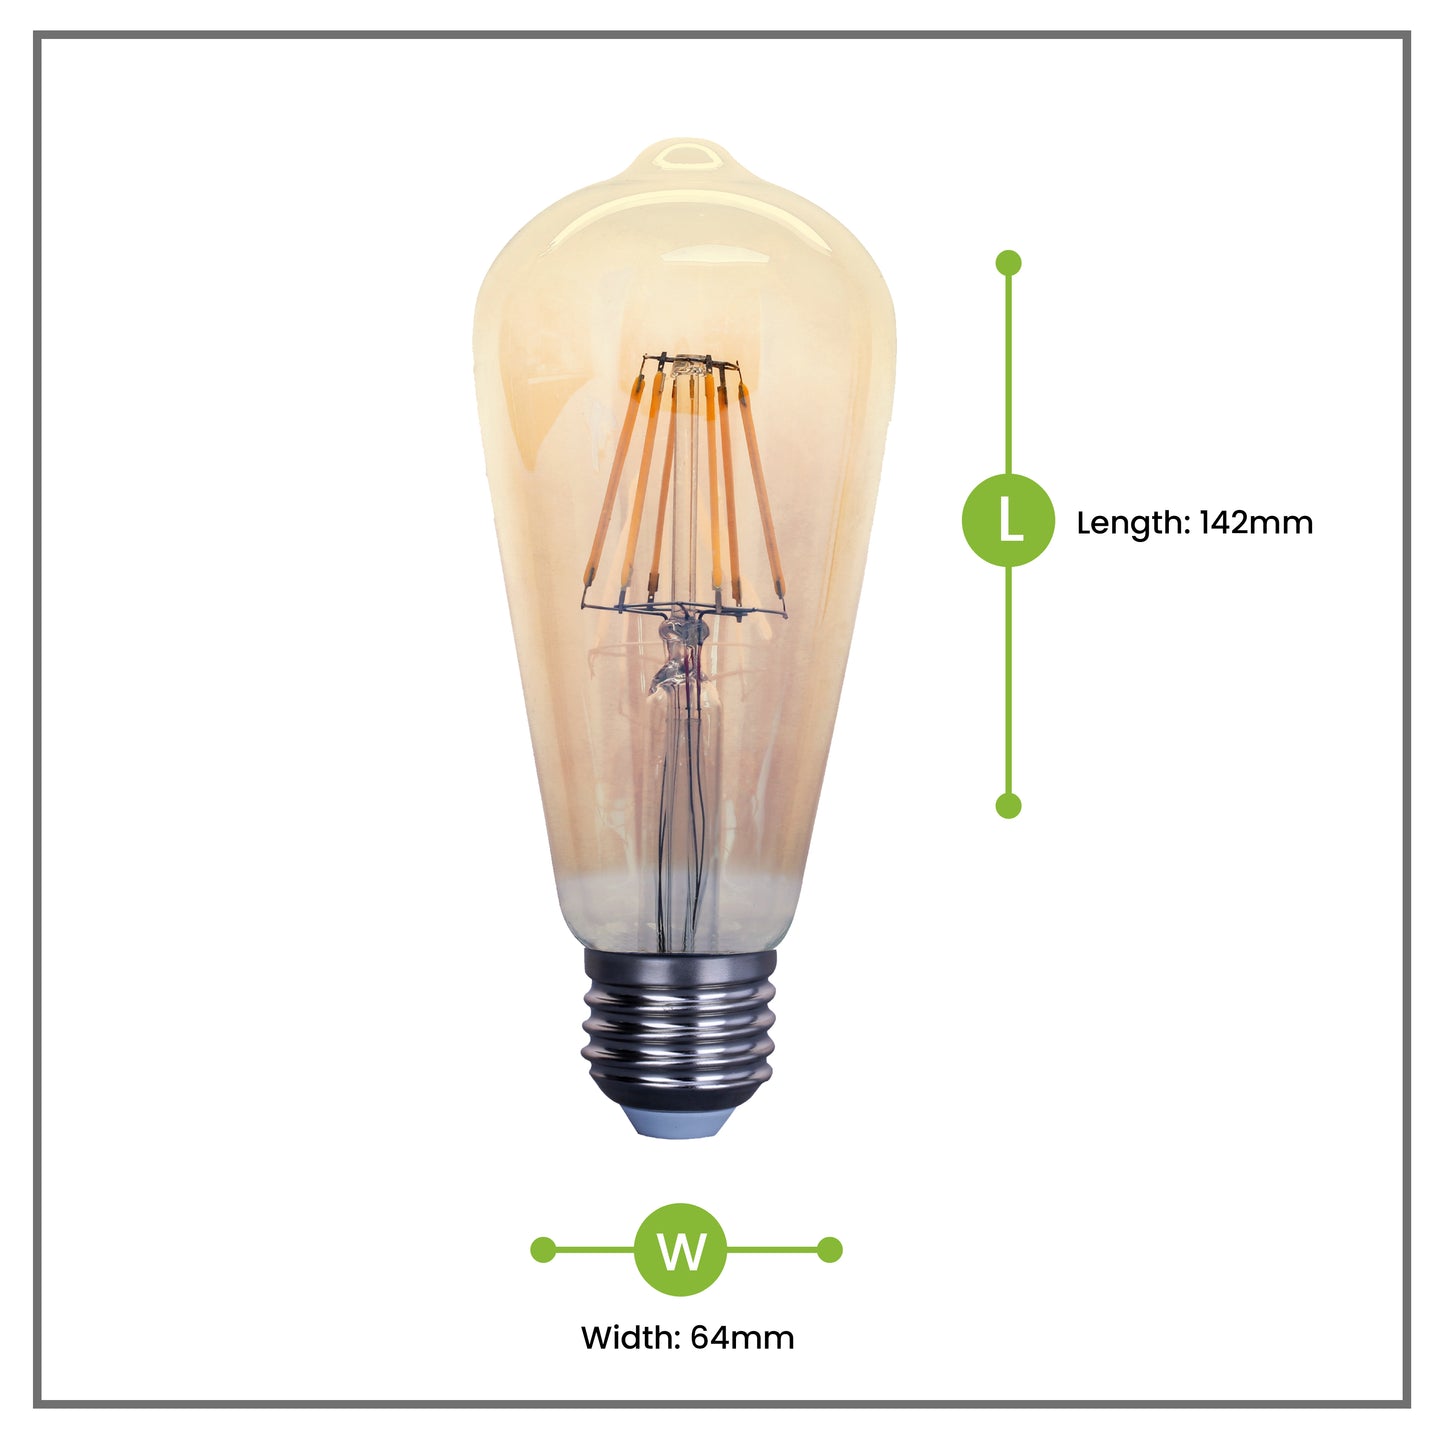 NxLedNxled Amber Filament Bulb (ANX-AFS4W)
Key Features:
Nxled Amber Filament Bulb (ANX-AFS4W)


4W, 2700K Amber, 390 lumens
E27, 64x142mm, 30,000HRS
220-240VAC 50/60Hz
BulbsNXLED